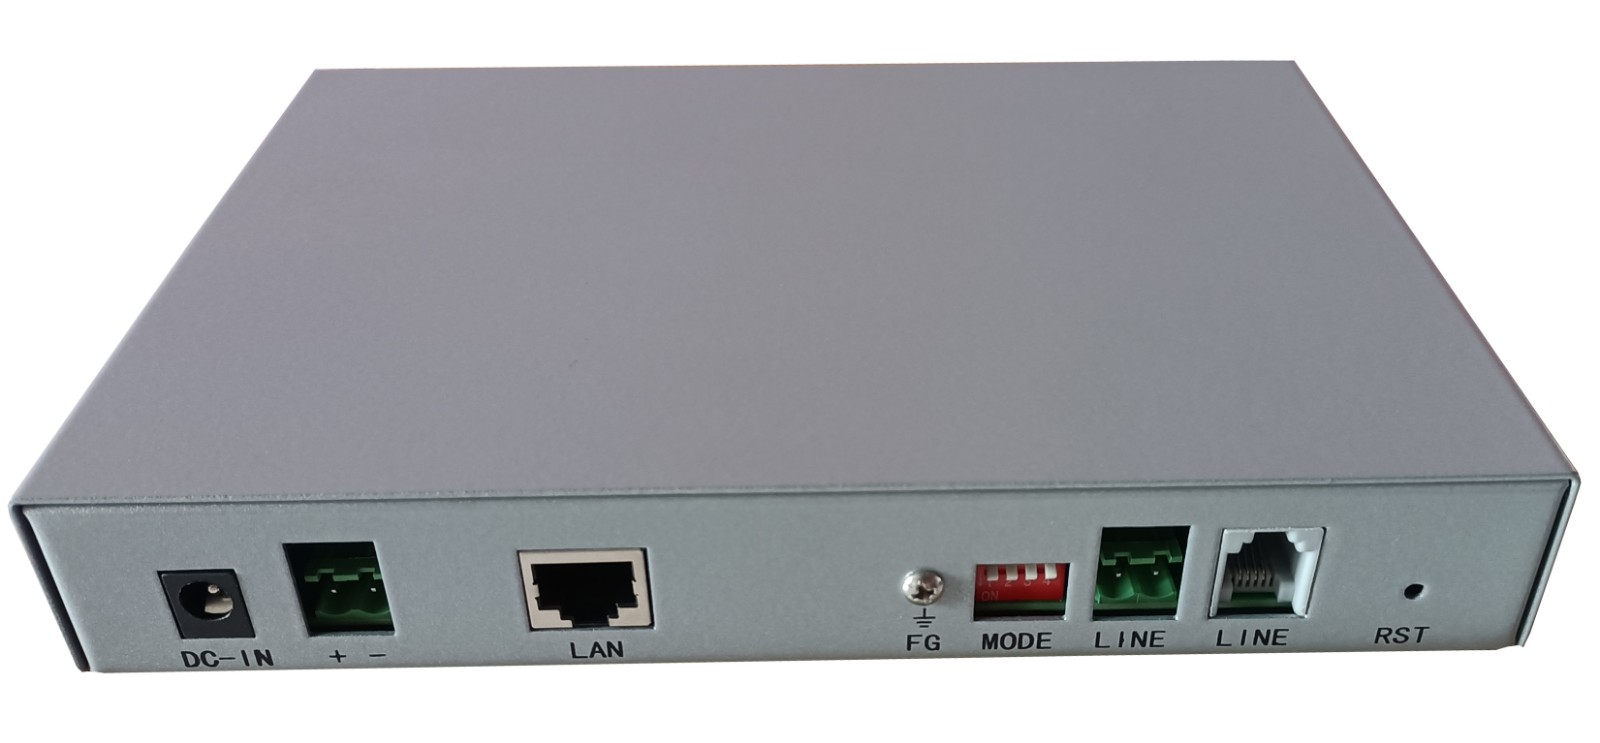 G.shdsl  调制解调器 电话线被覆线远传设备网络延长器